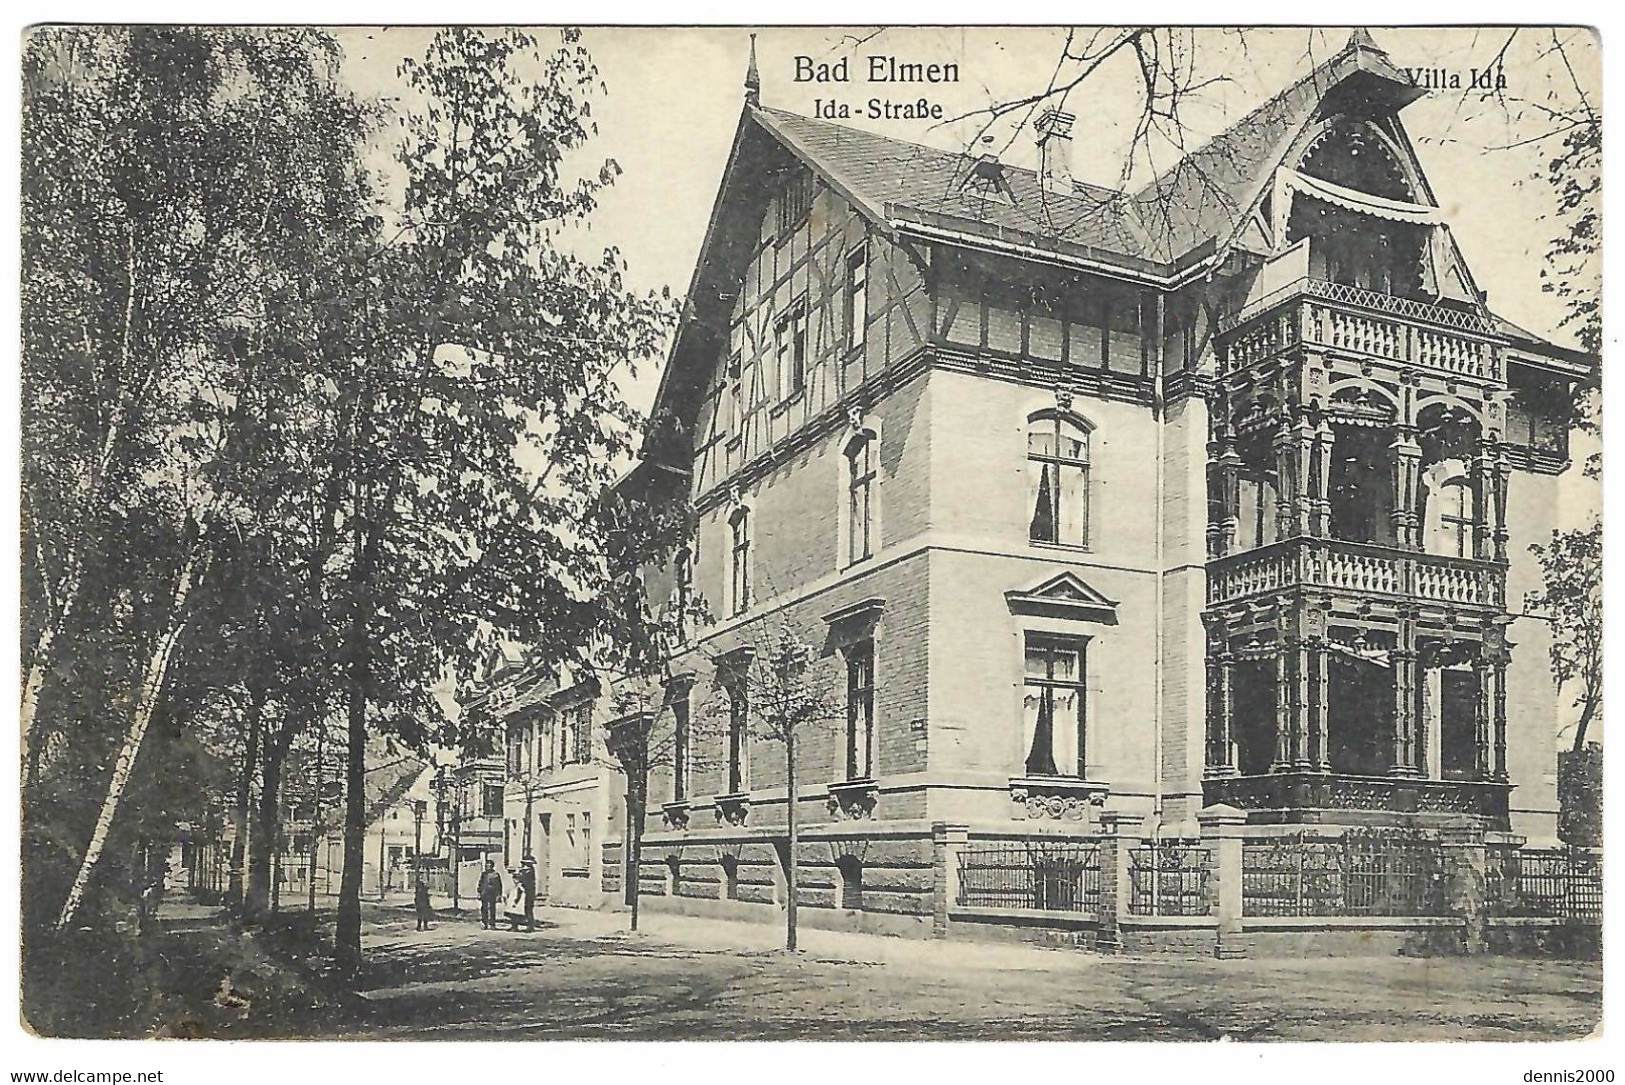 SCHOENEBECK - BAD ELMEN - Bad Salzelmen - Ida Starsse - Villa Ida - Oblit. 1916 - Schönebeck (Elbe)